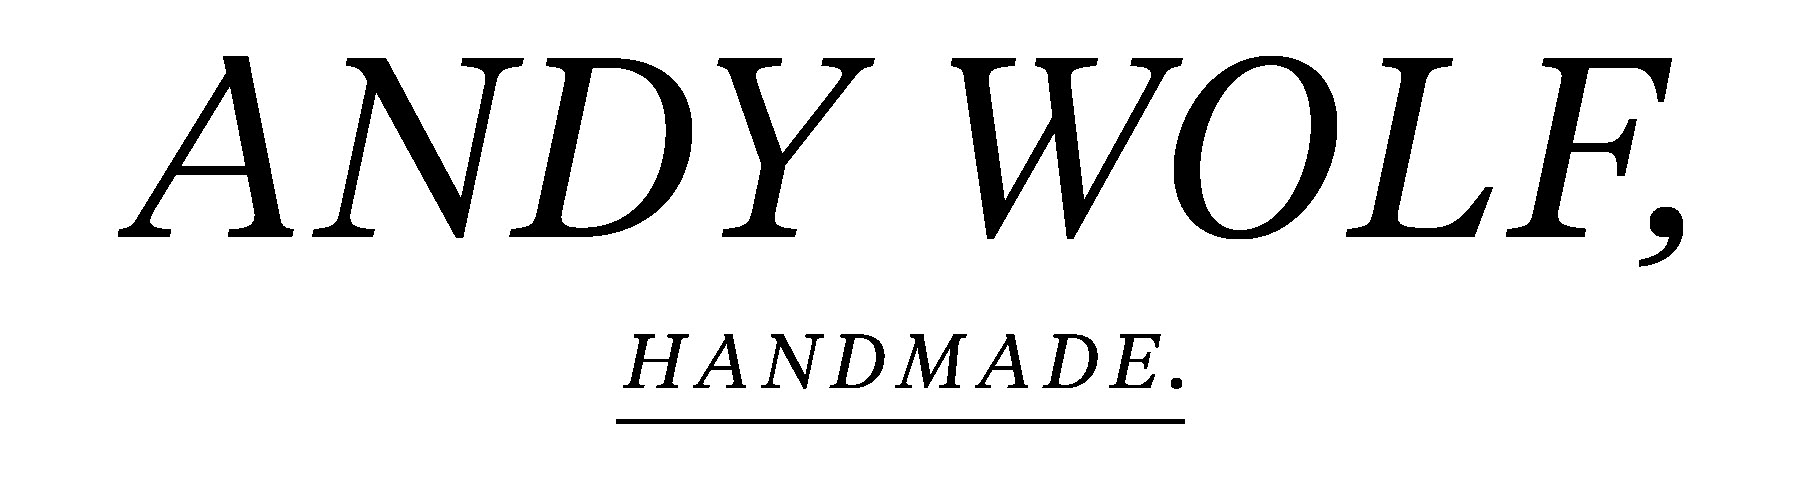 Andy Wolf - Handmade